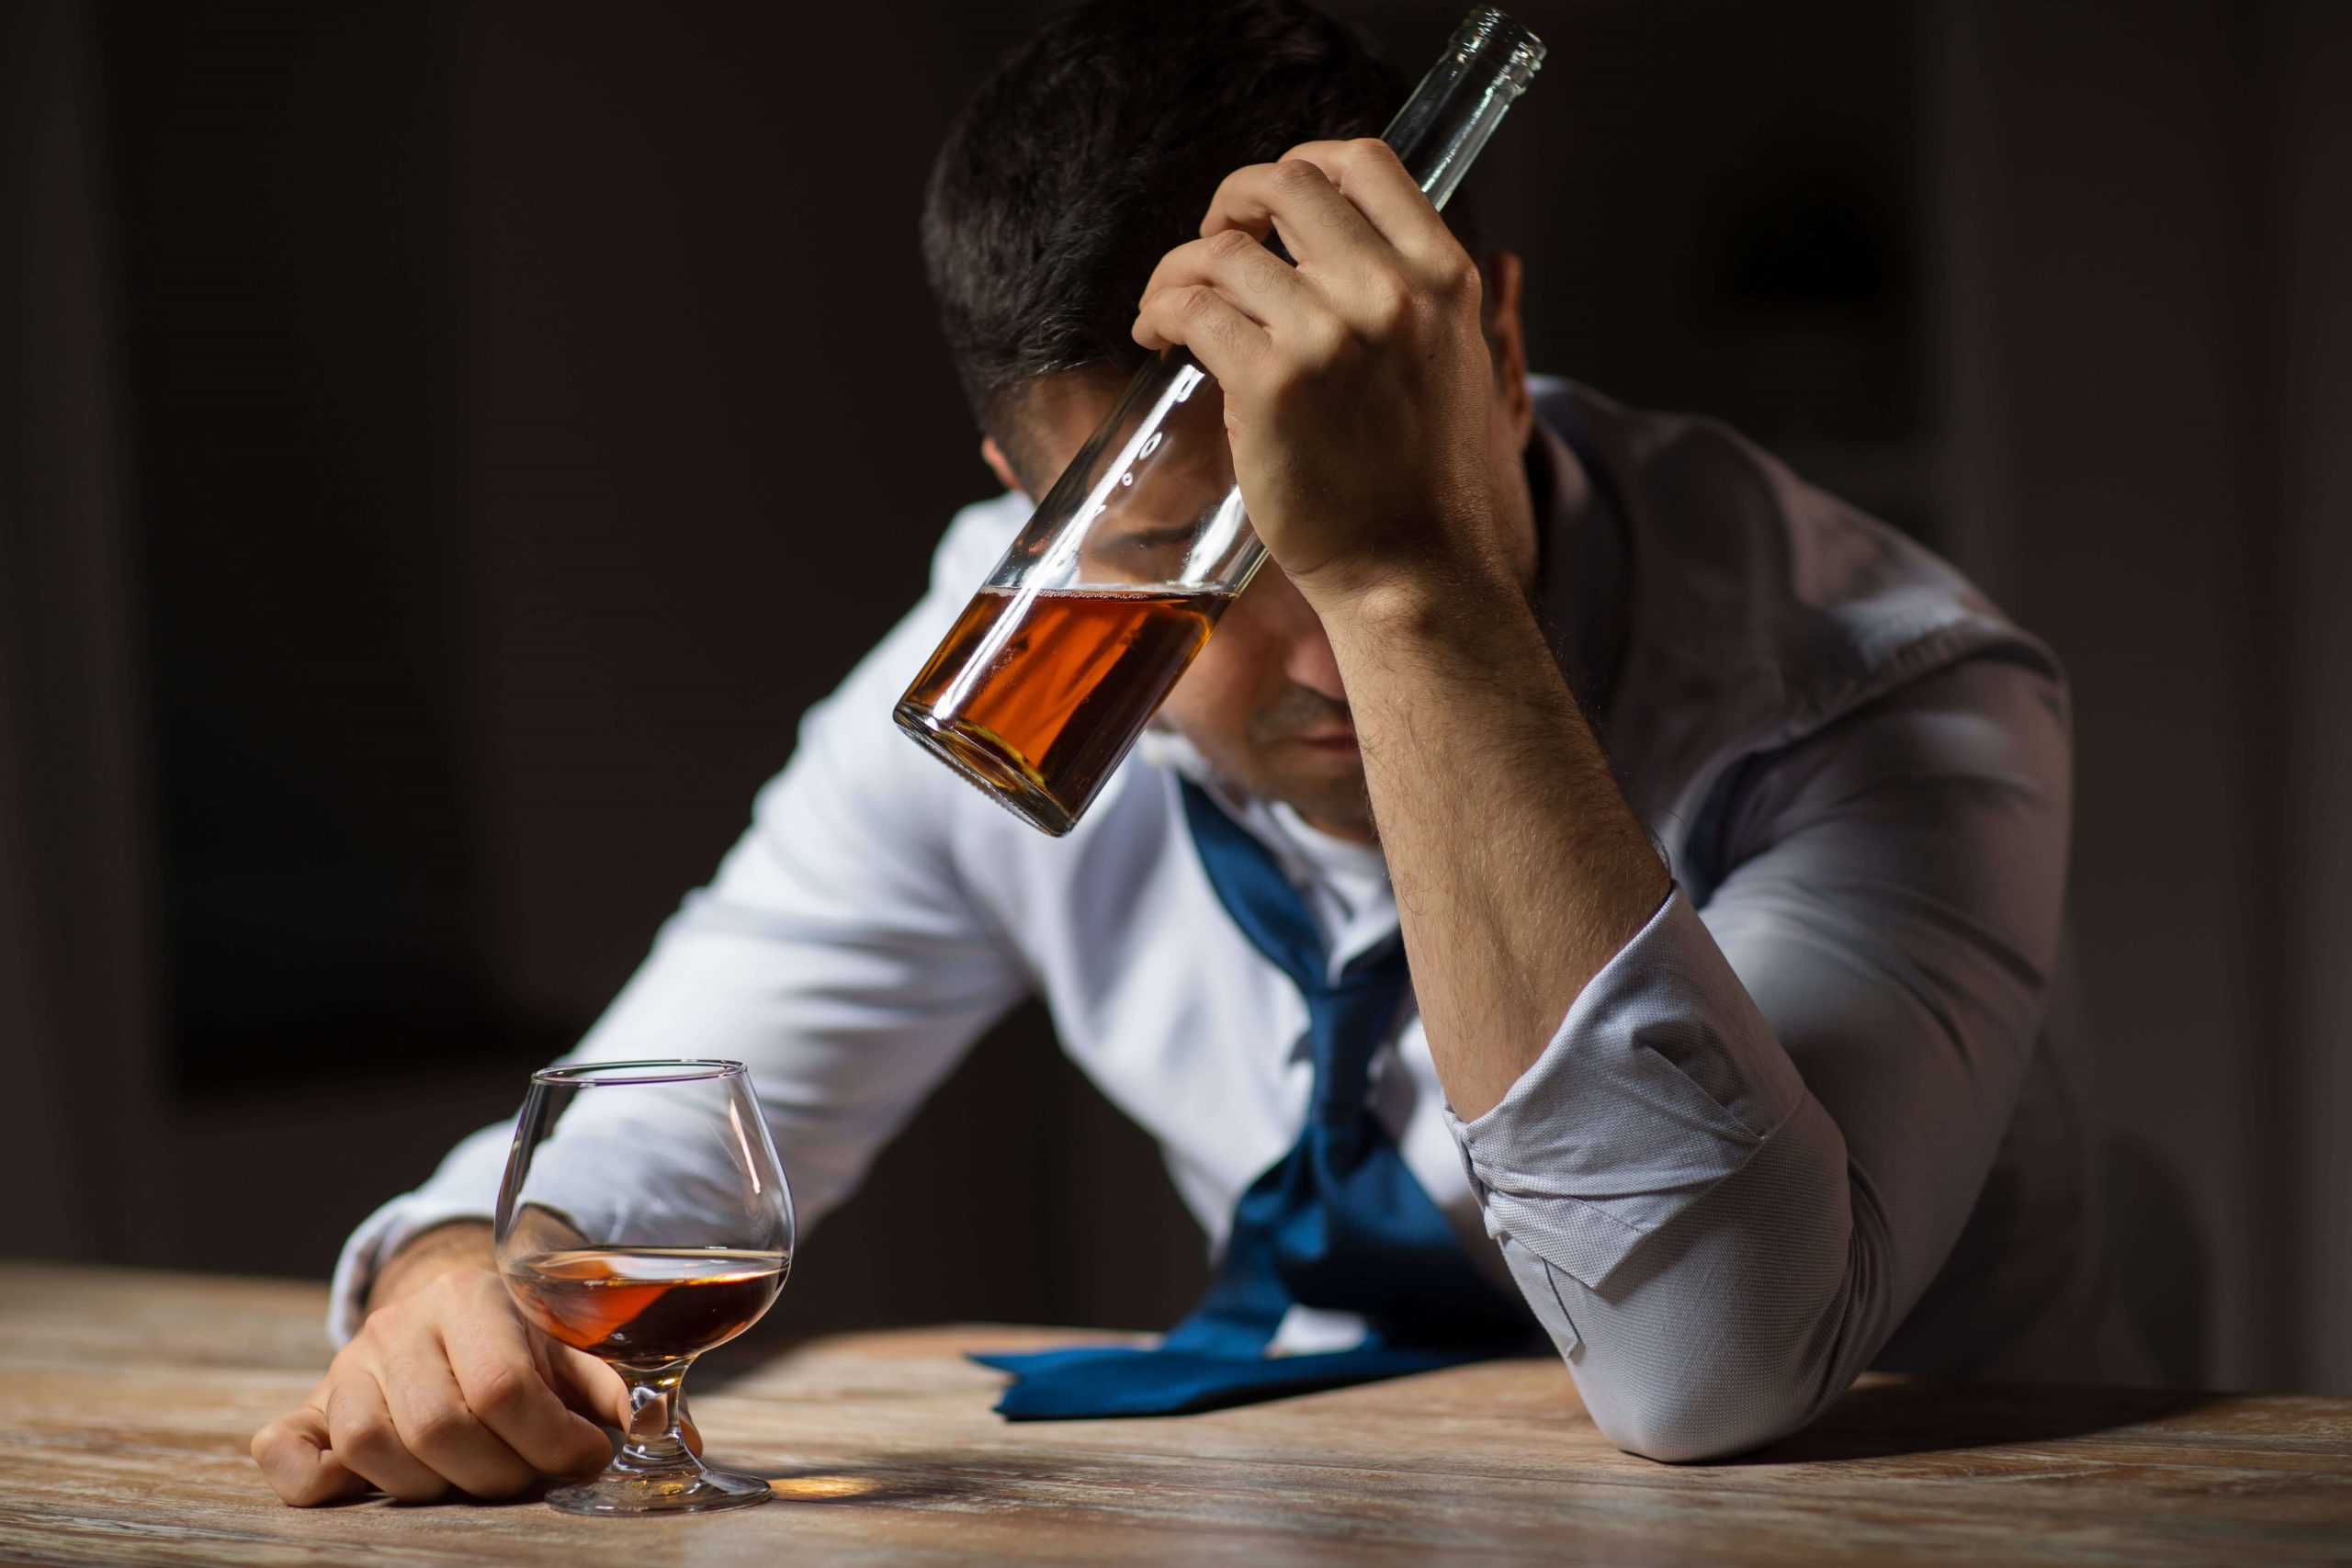 depressed man self medicating with alcohol